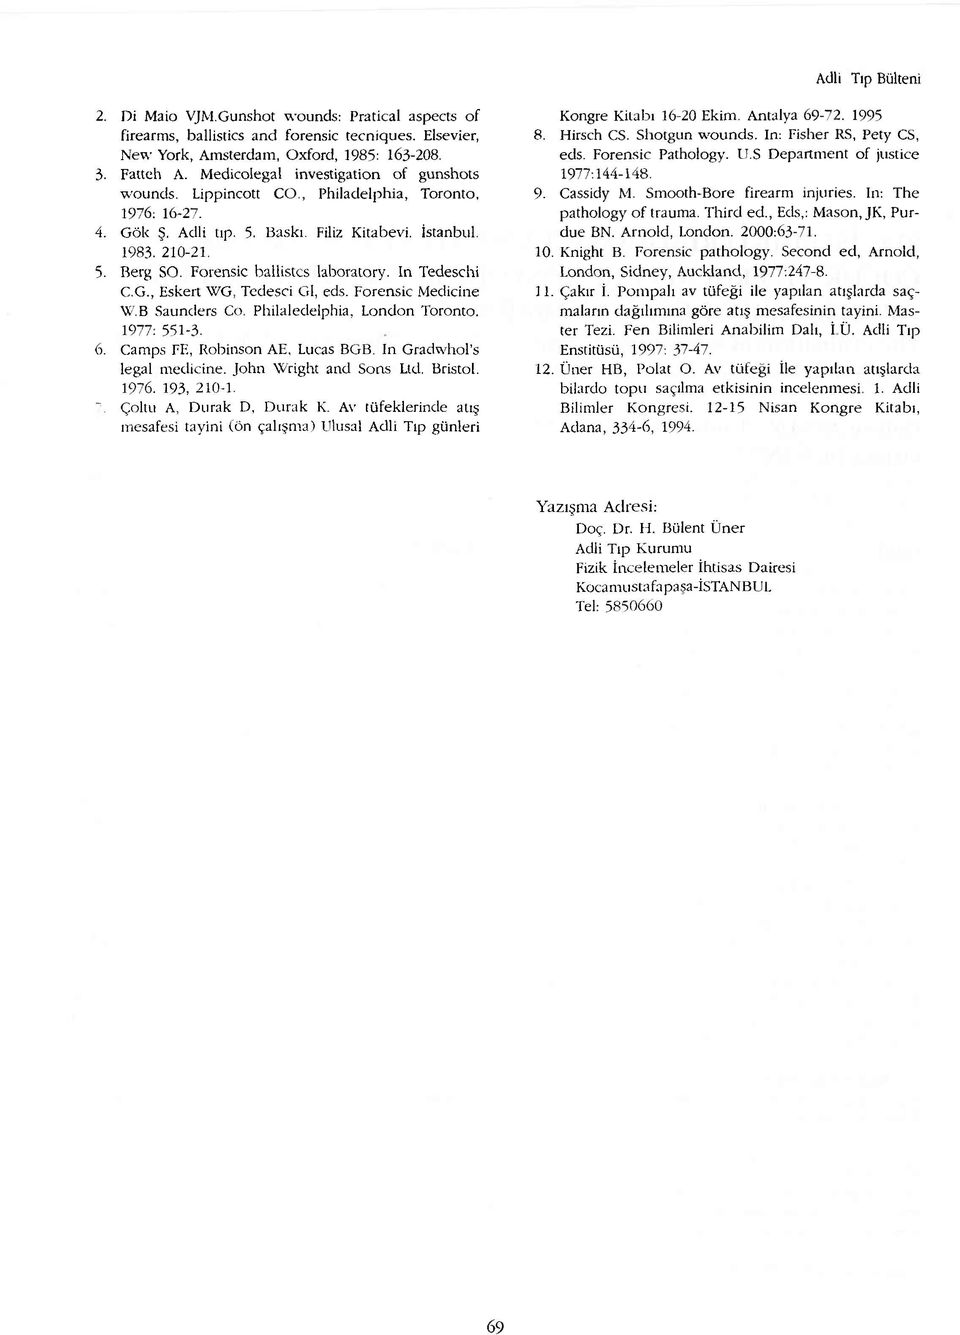 Forensic ballistcs laboratory. In Tedeschi C.G., Eskert WG, Tedesci Gl, eds. Forensic Medicine W.B Saunders Co. Philaledelphia, London Toronto. 1977: 551-3. 6. Camps FE, Robinson AE, Lucas BGB.